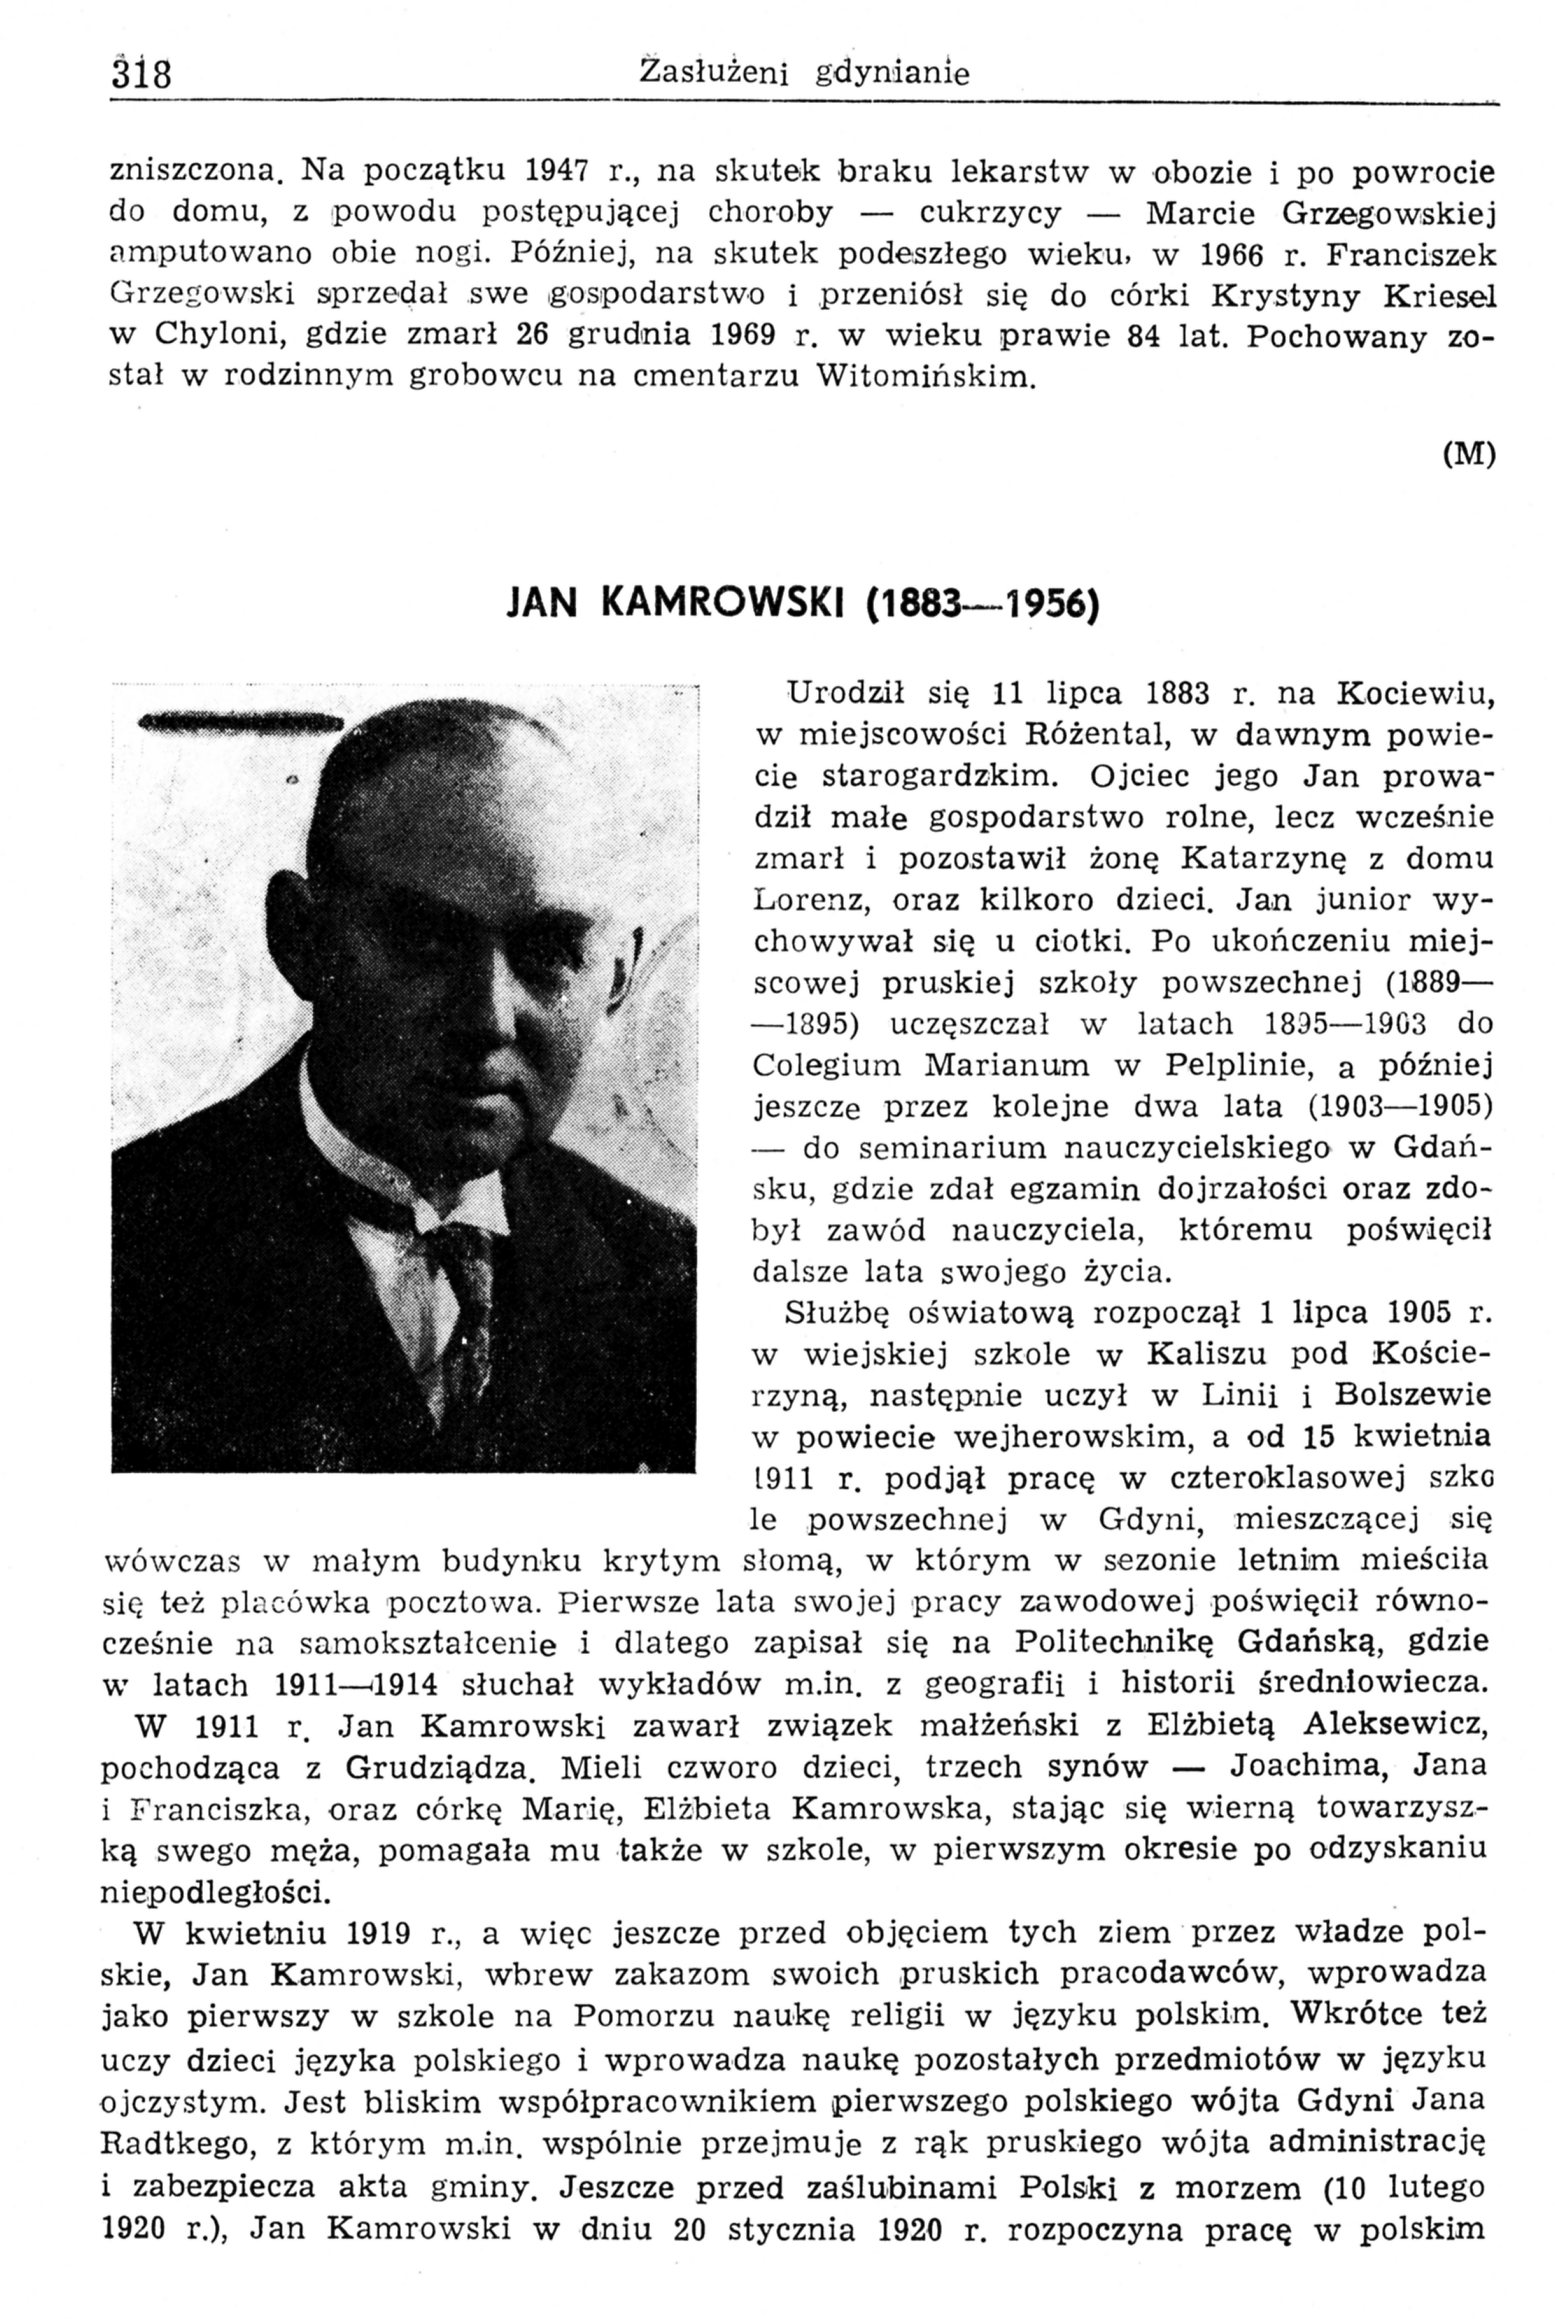 Kamrowski Jan (1883-1956)